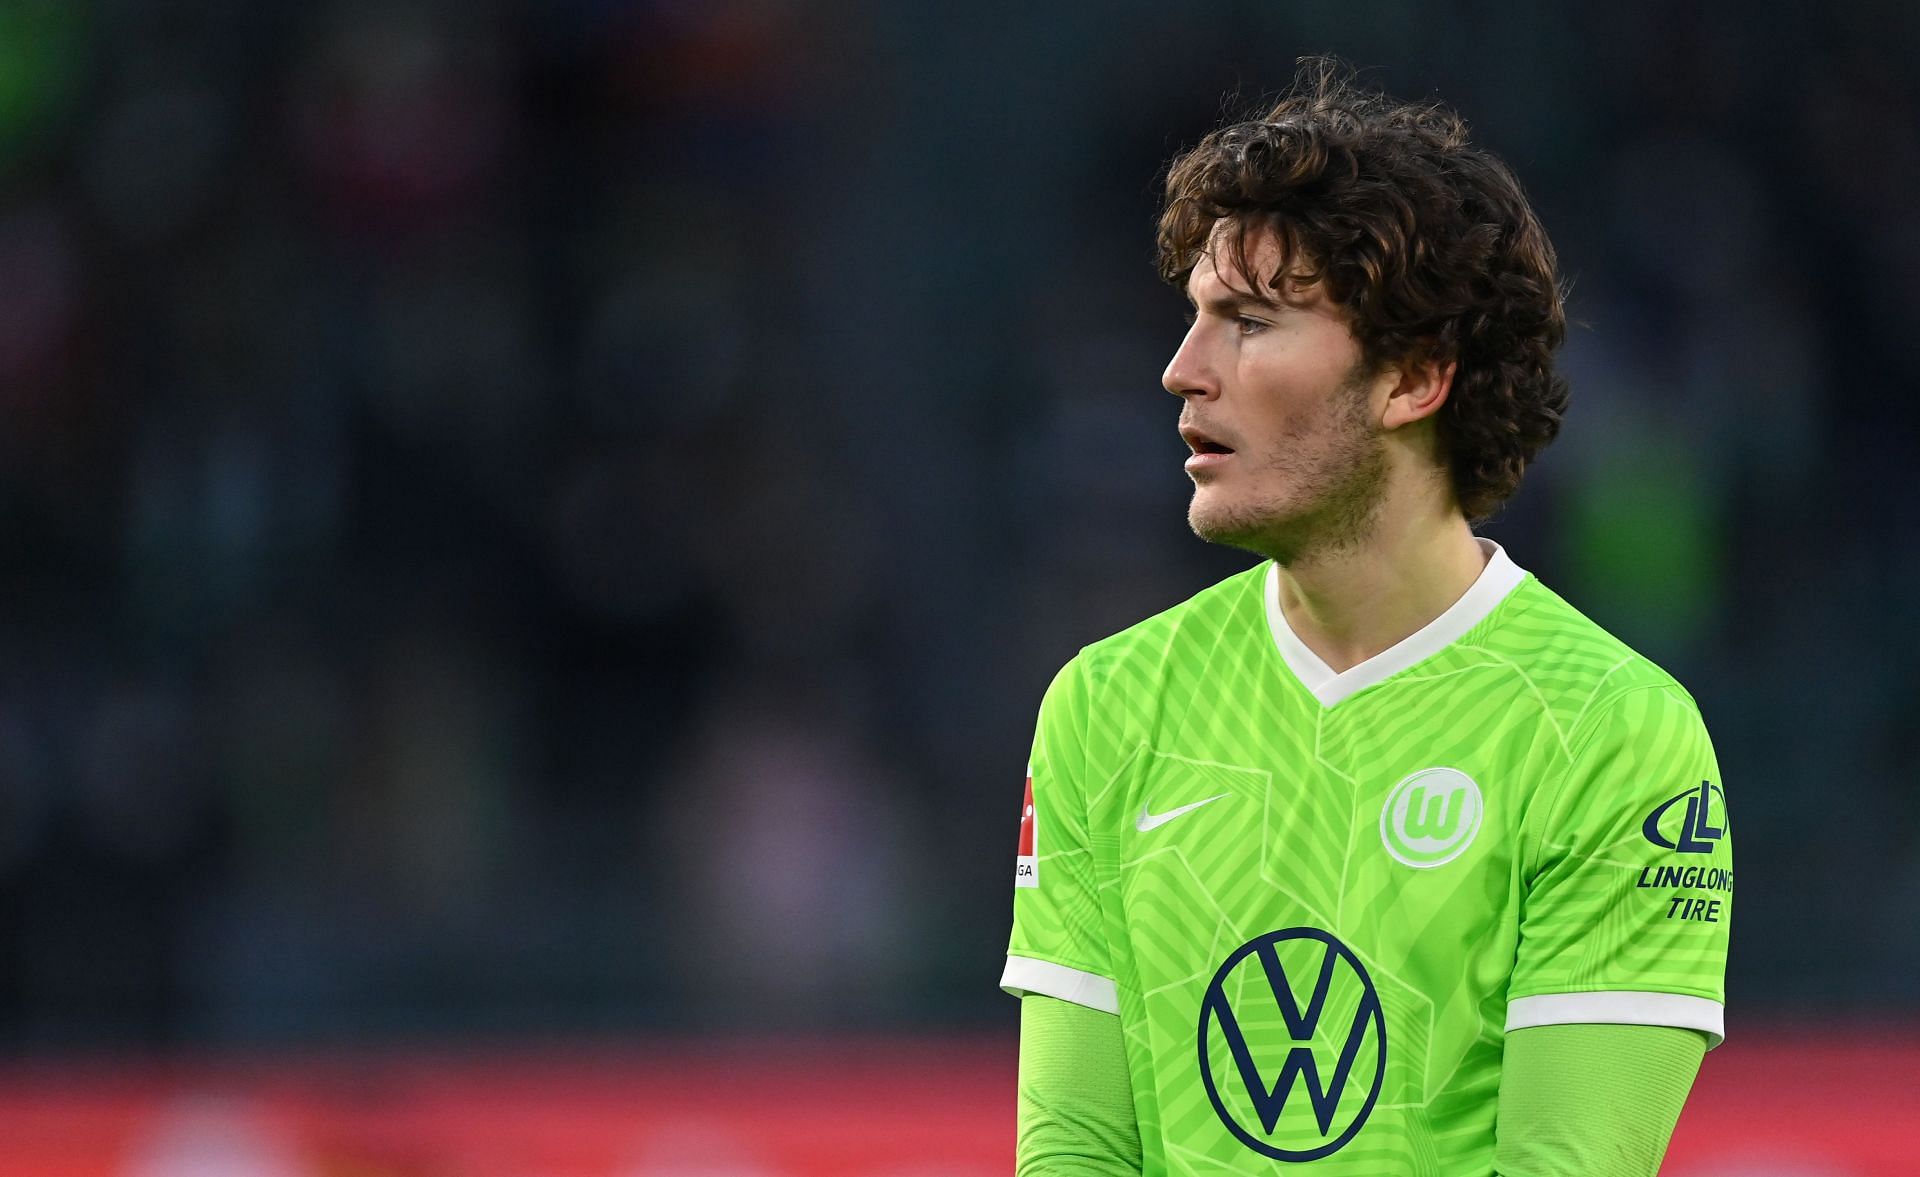 VfL Wolfsburg will host Union Berlin on Saturday - Bundesliga